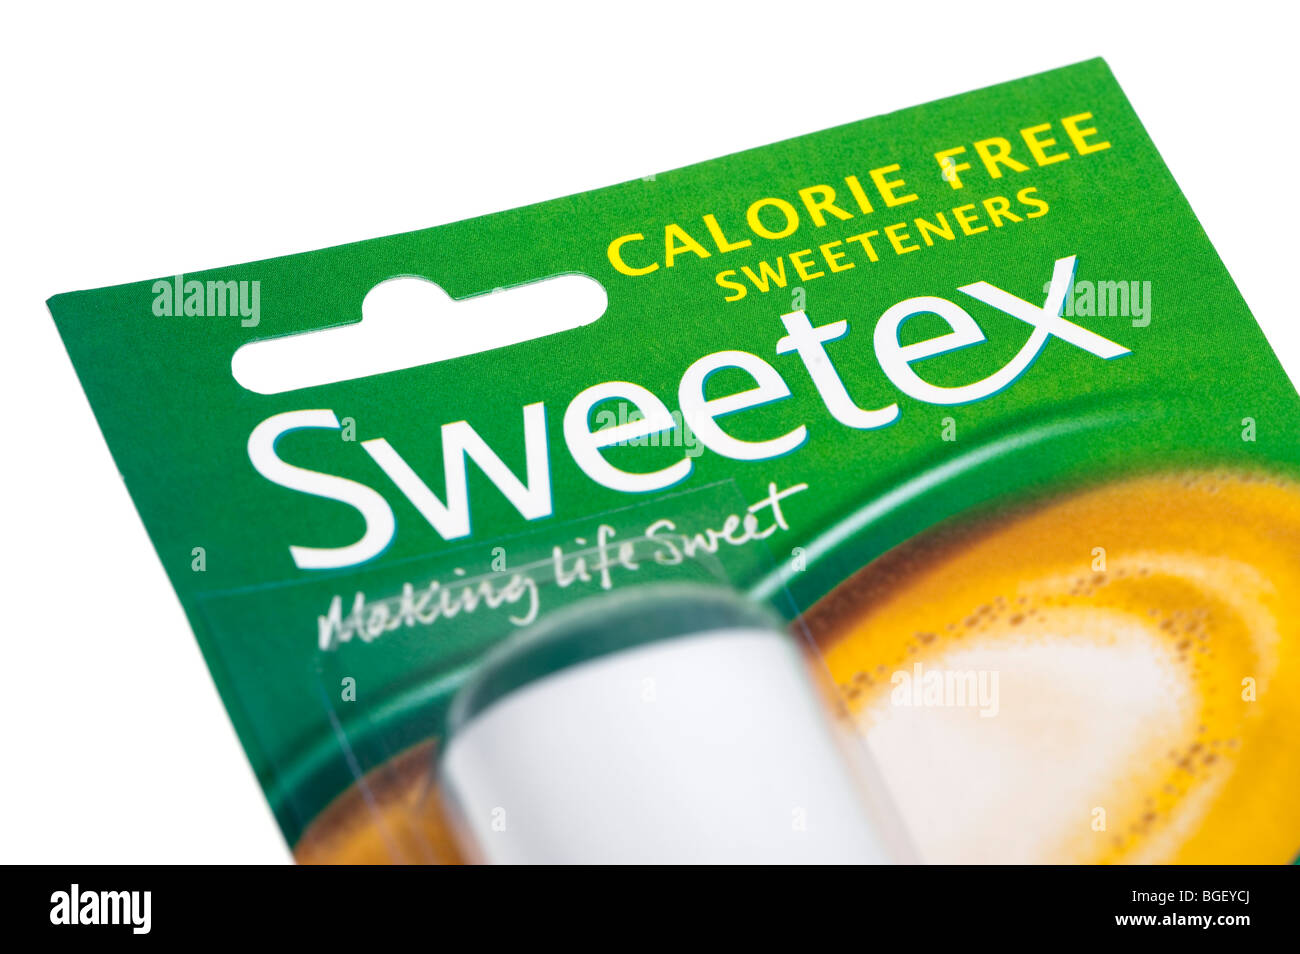 sweetex calorie free sweeteners Stock Photo